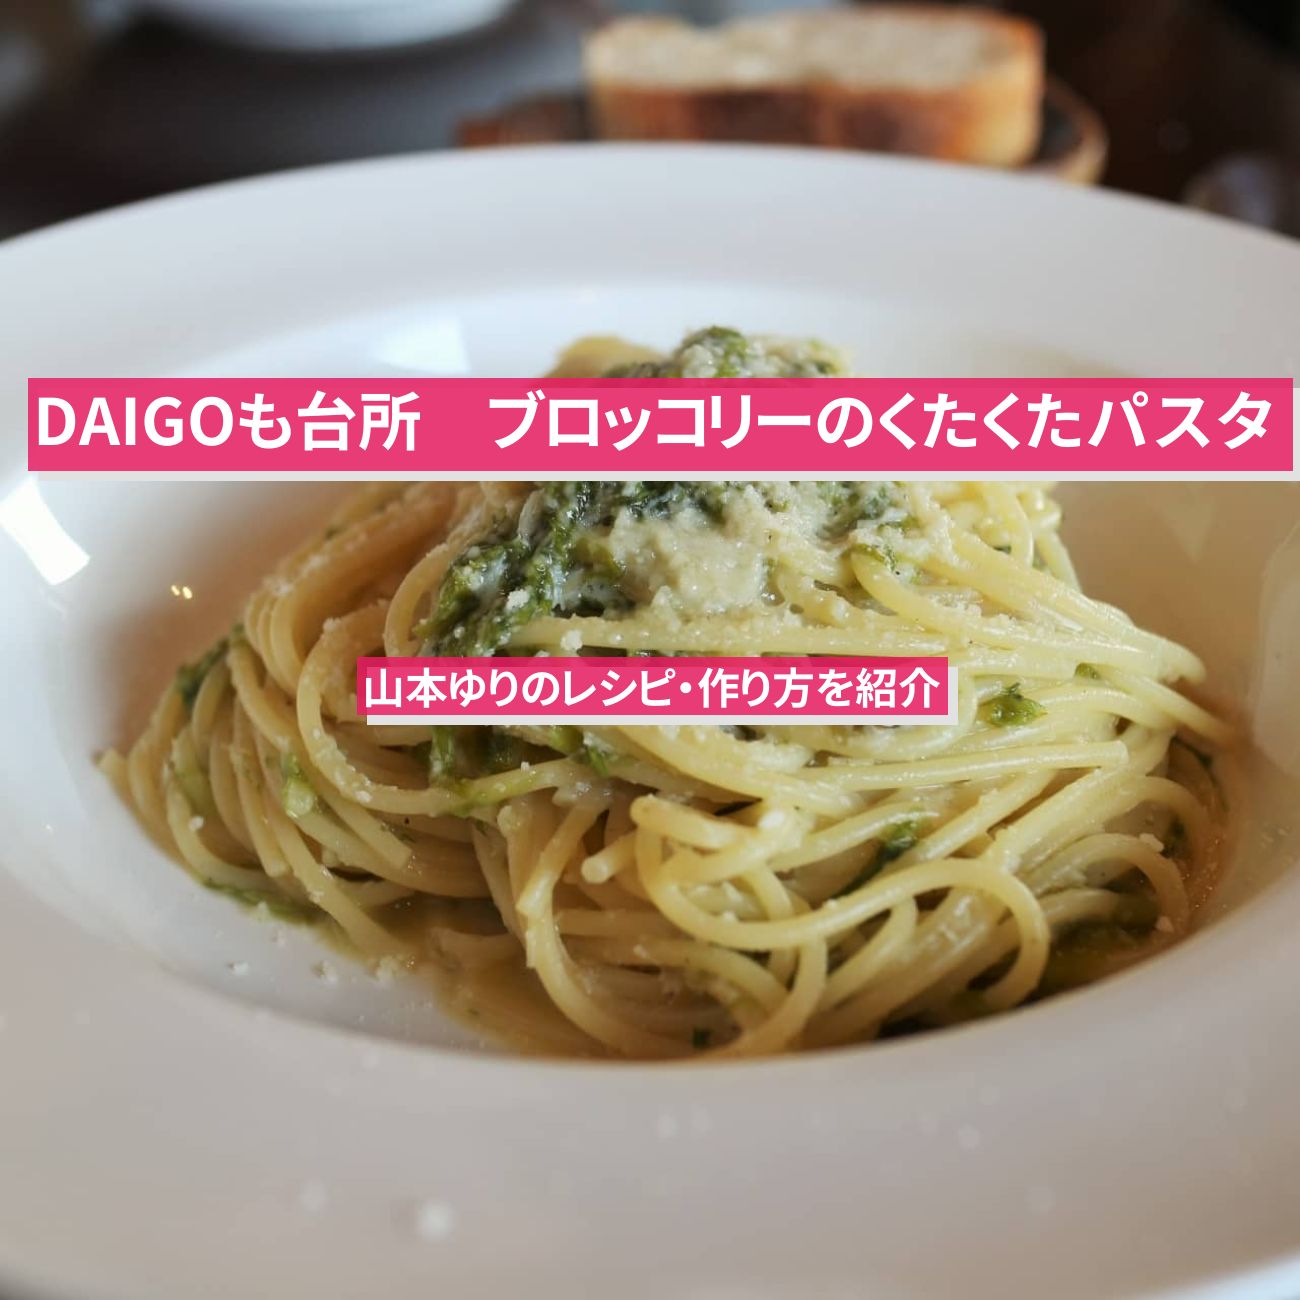 【DAIGOも台所】『ブロッコリーのくたくたパスタ』山本ゆりのレシピ・作り方を紹介